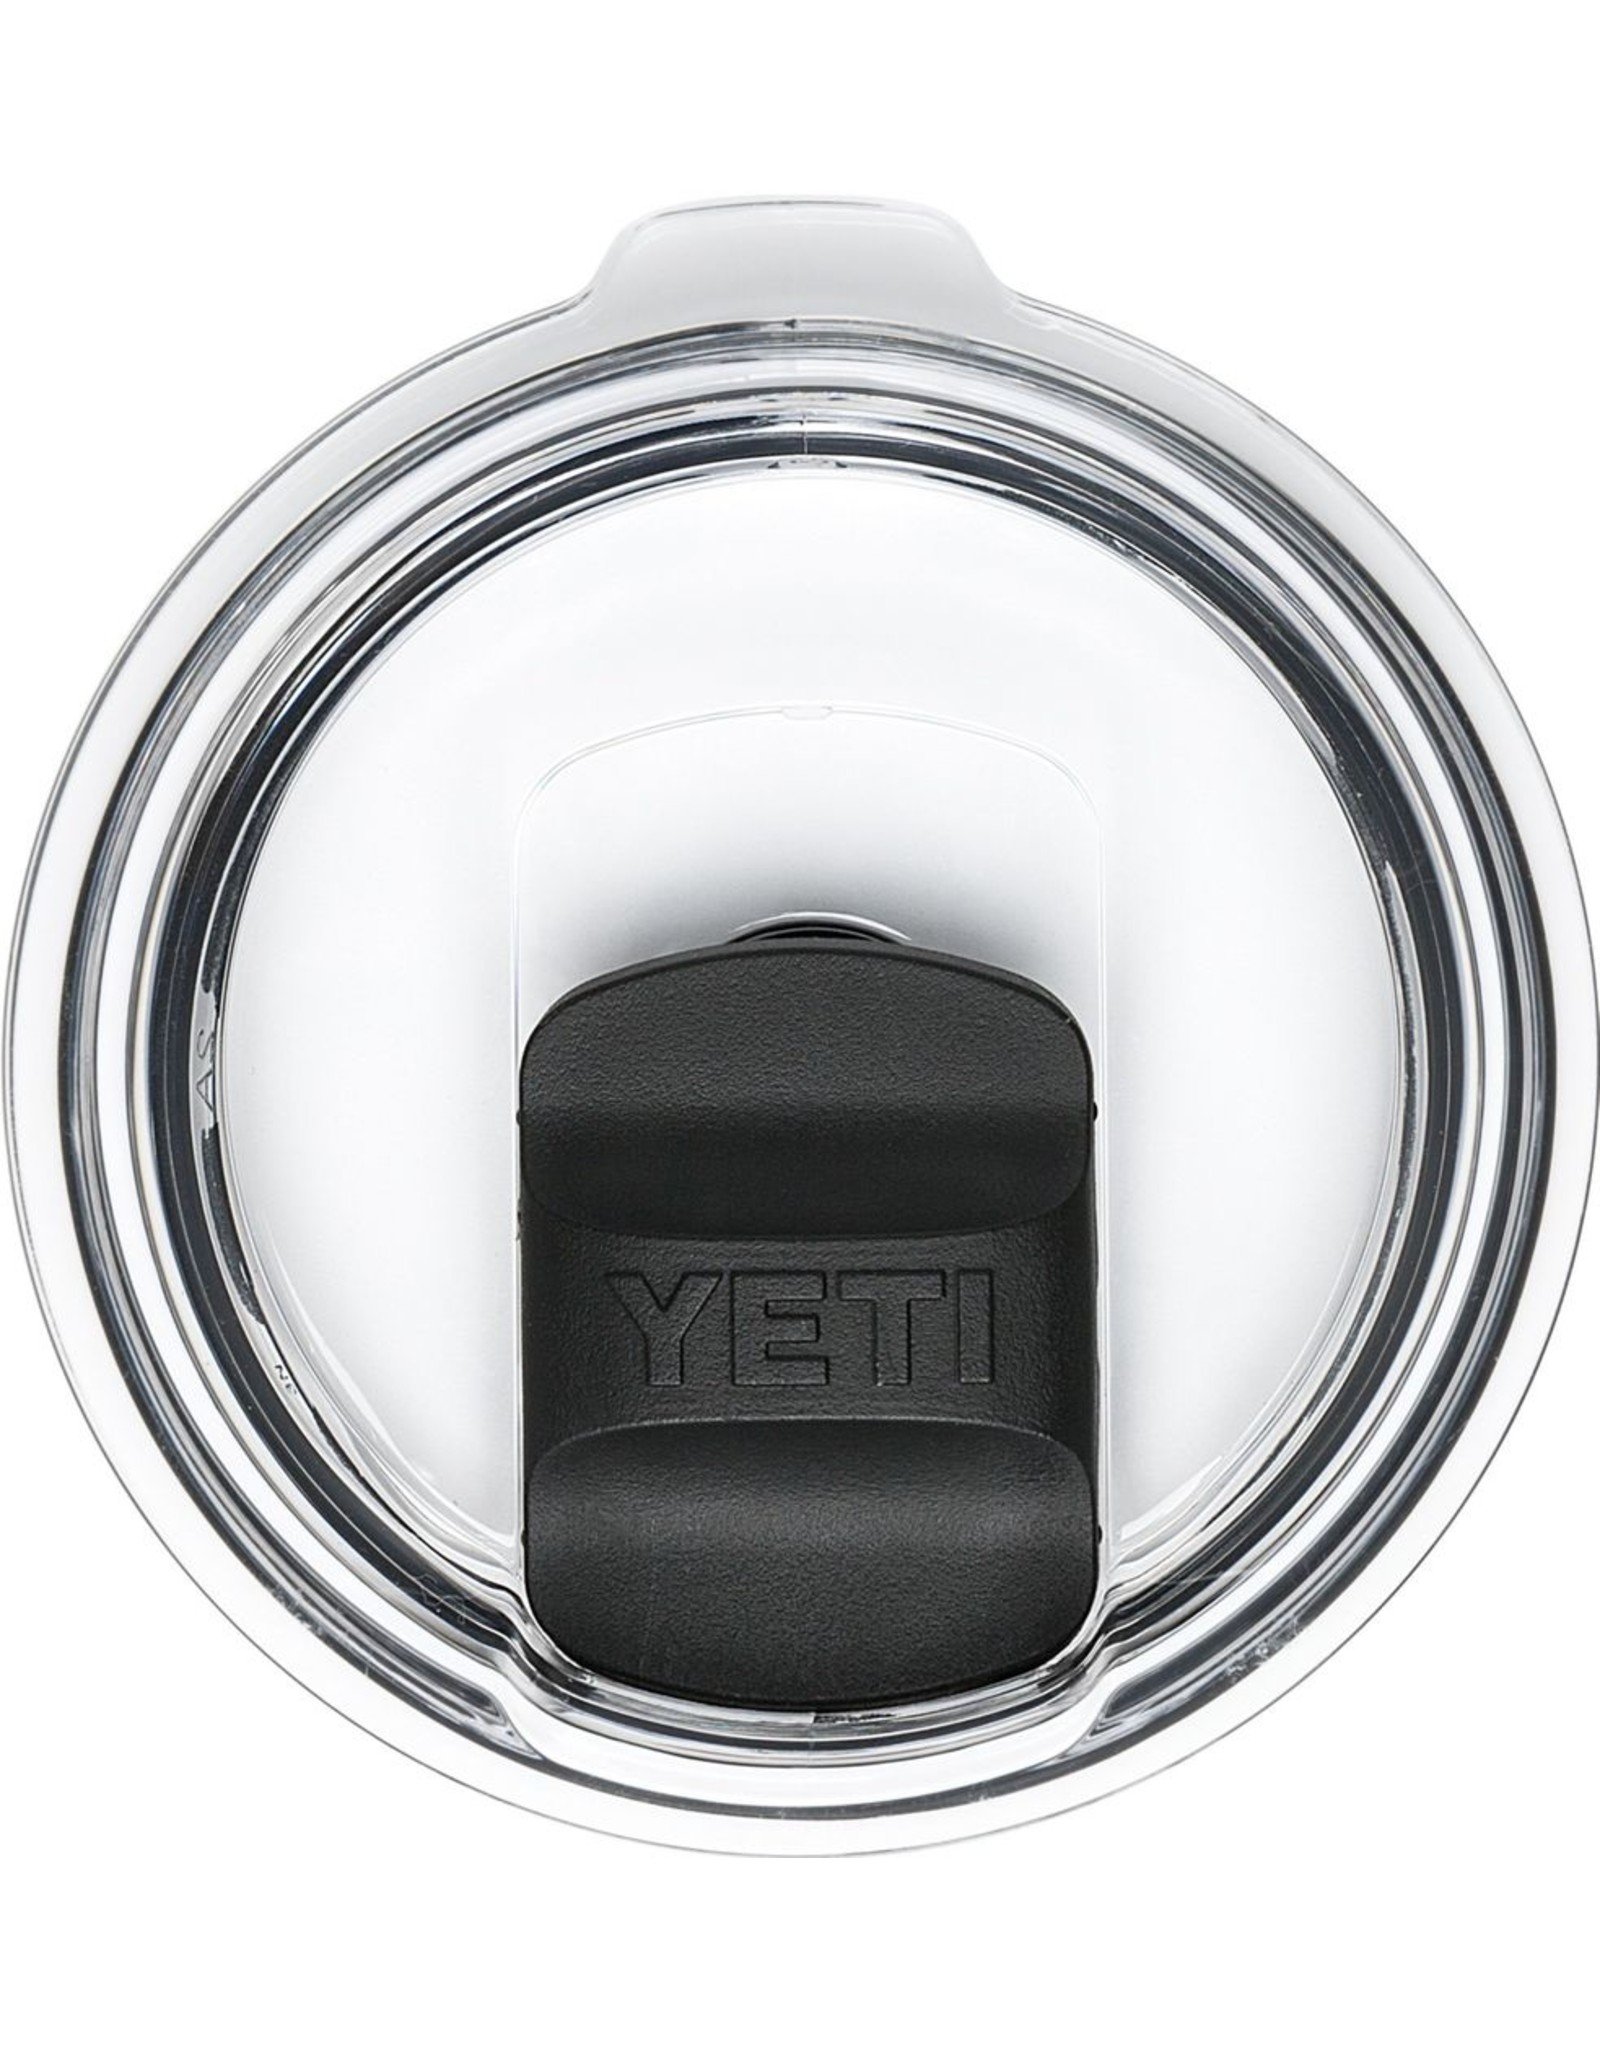 Yeti Rambler Magnetic Slider Lid, for 10/20-oz. Tumblers